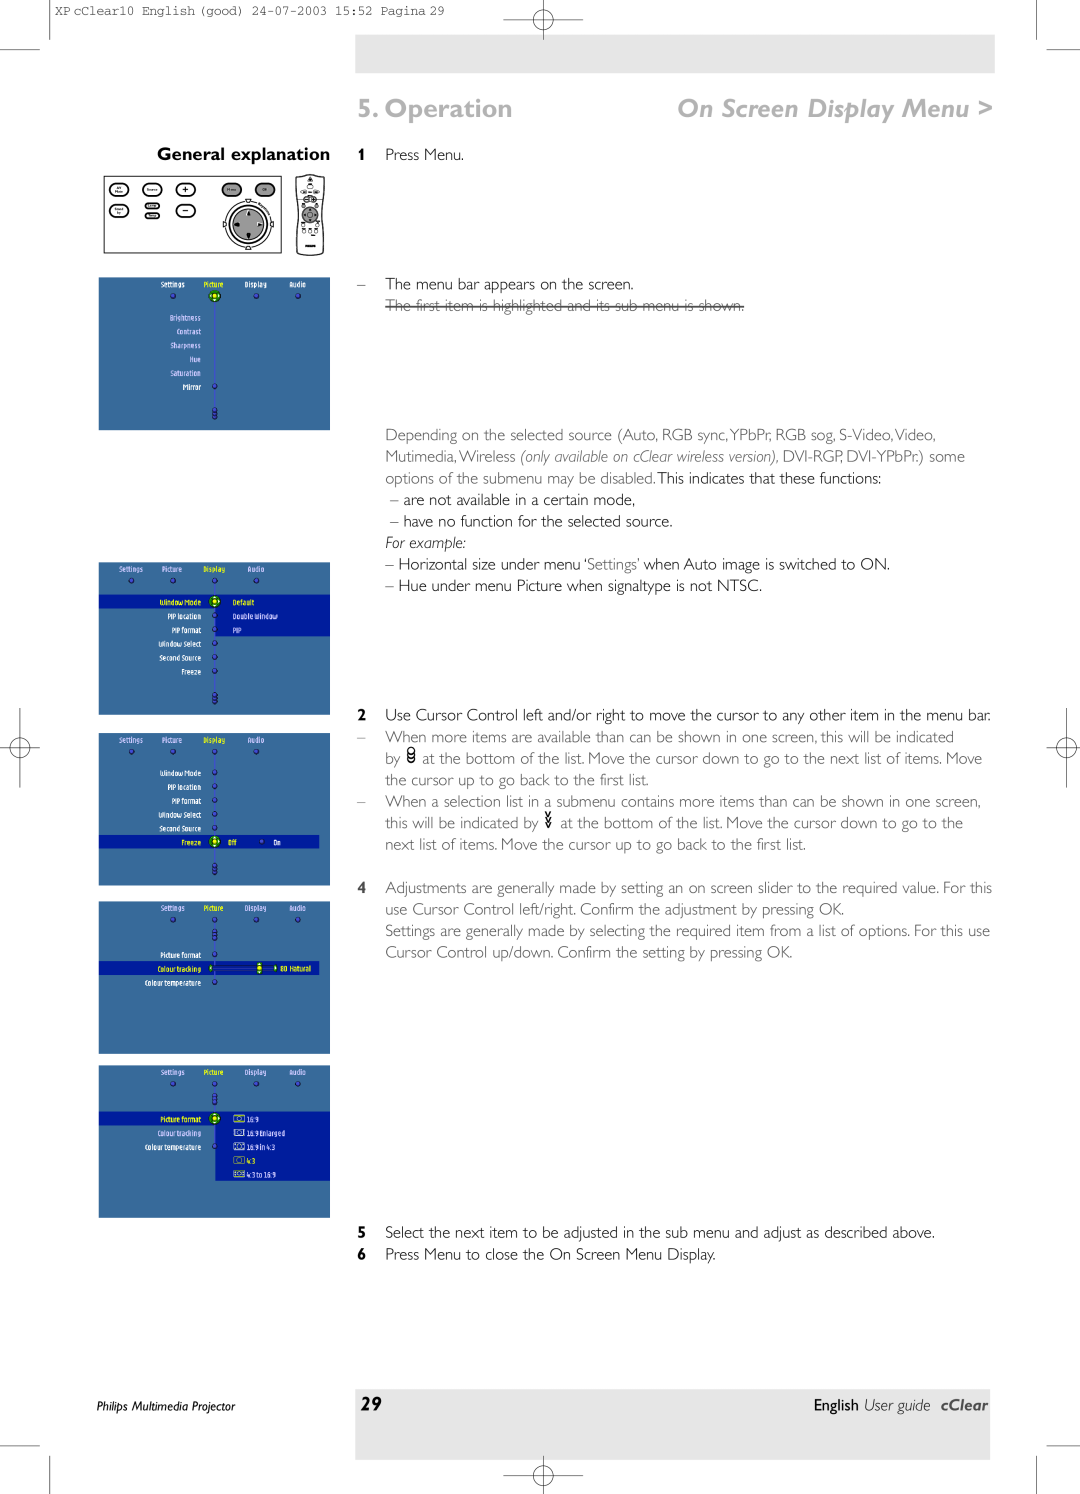 Philips bSure 1 manual Operation, On Screen Display Menu, General explanation 1 Press Menu 